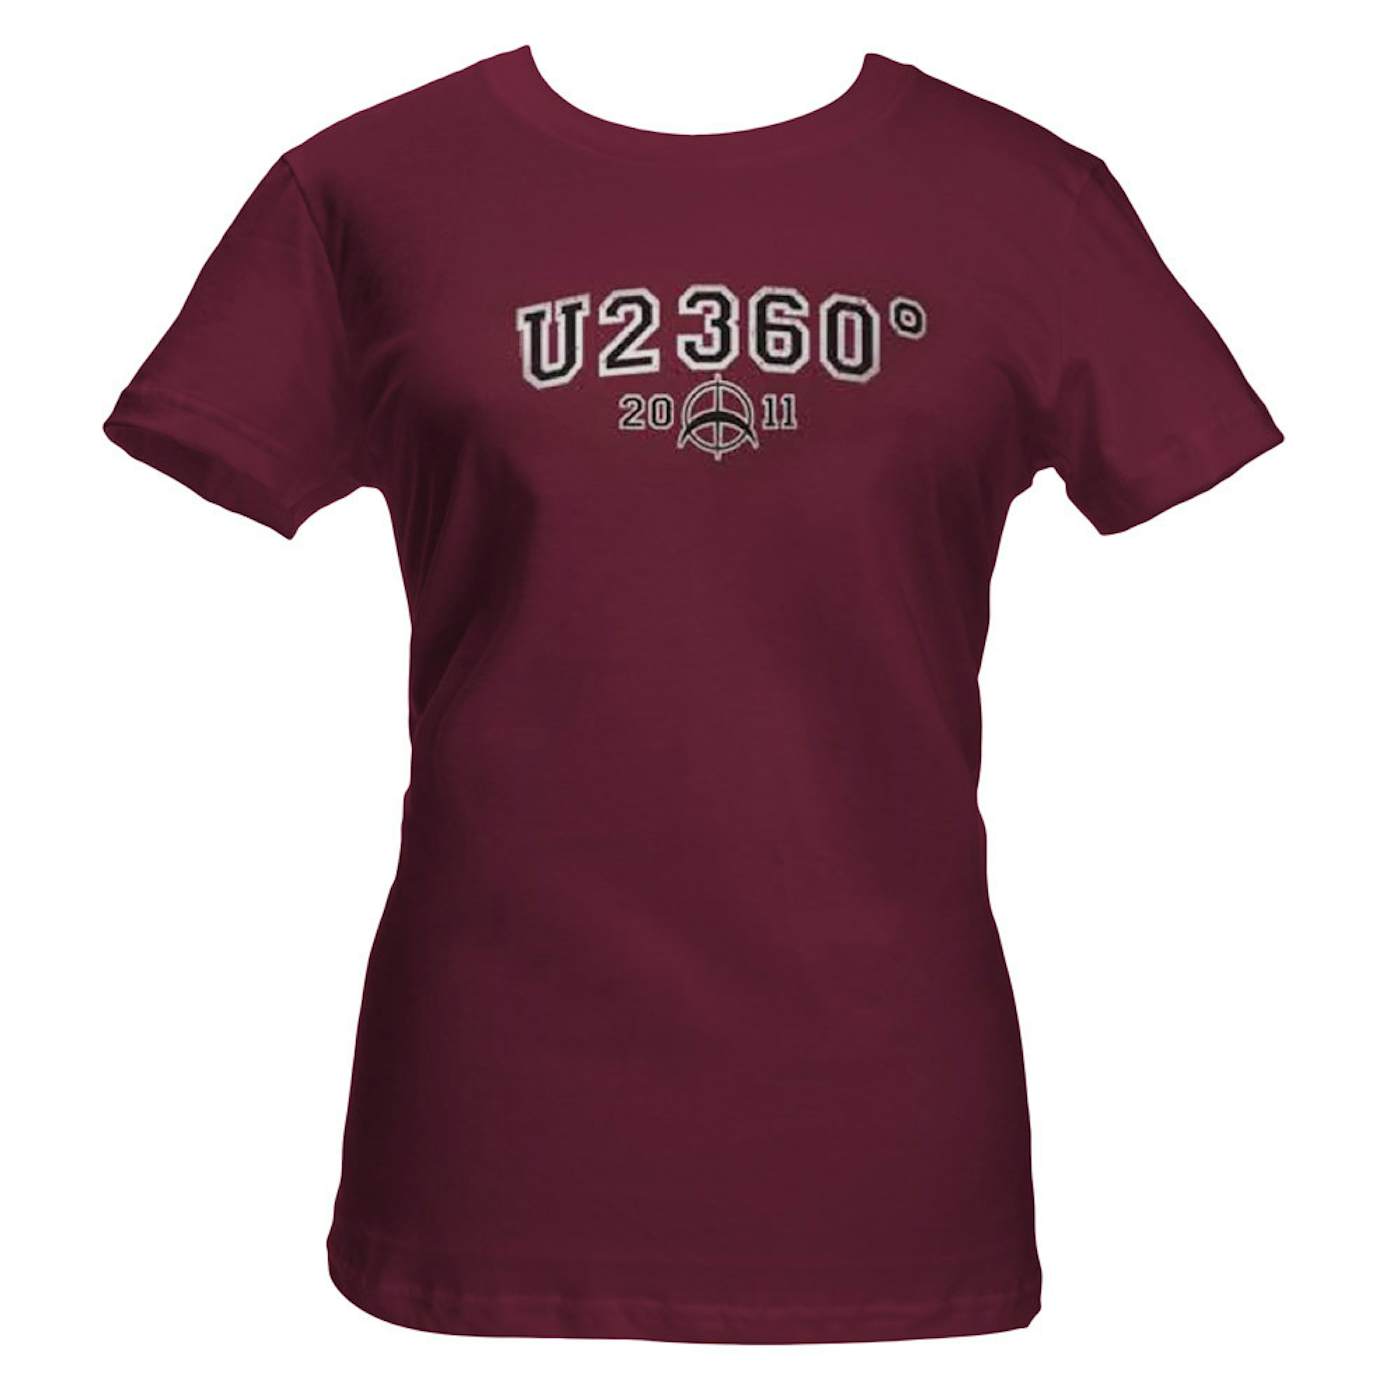 U2 2011 360 Tour Babydoll Shirt*